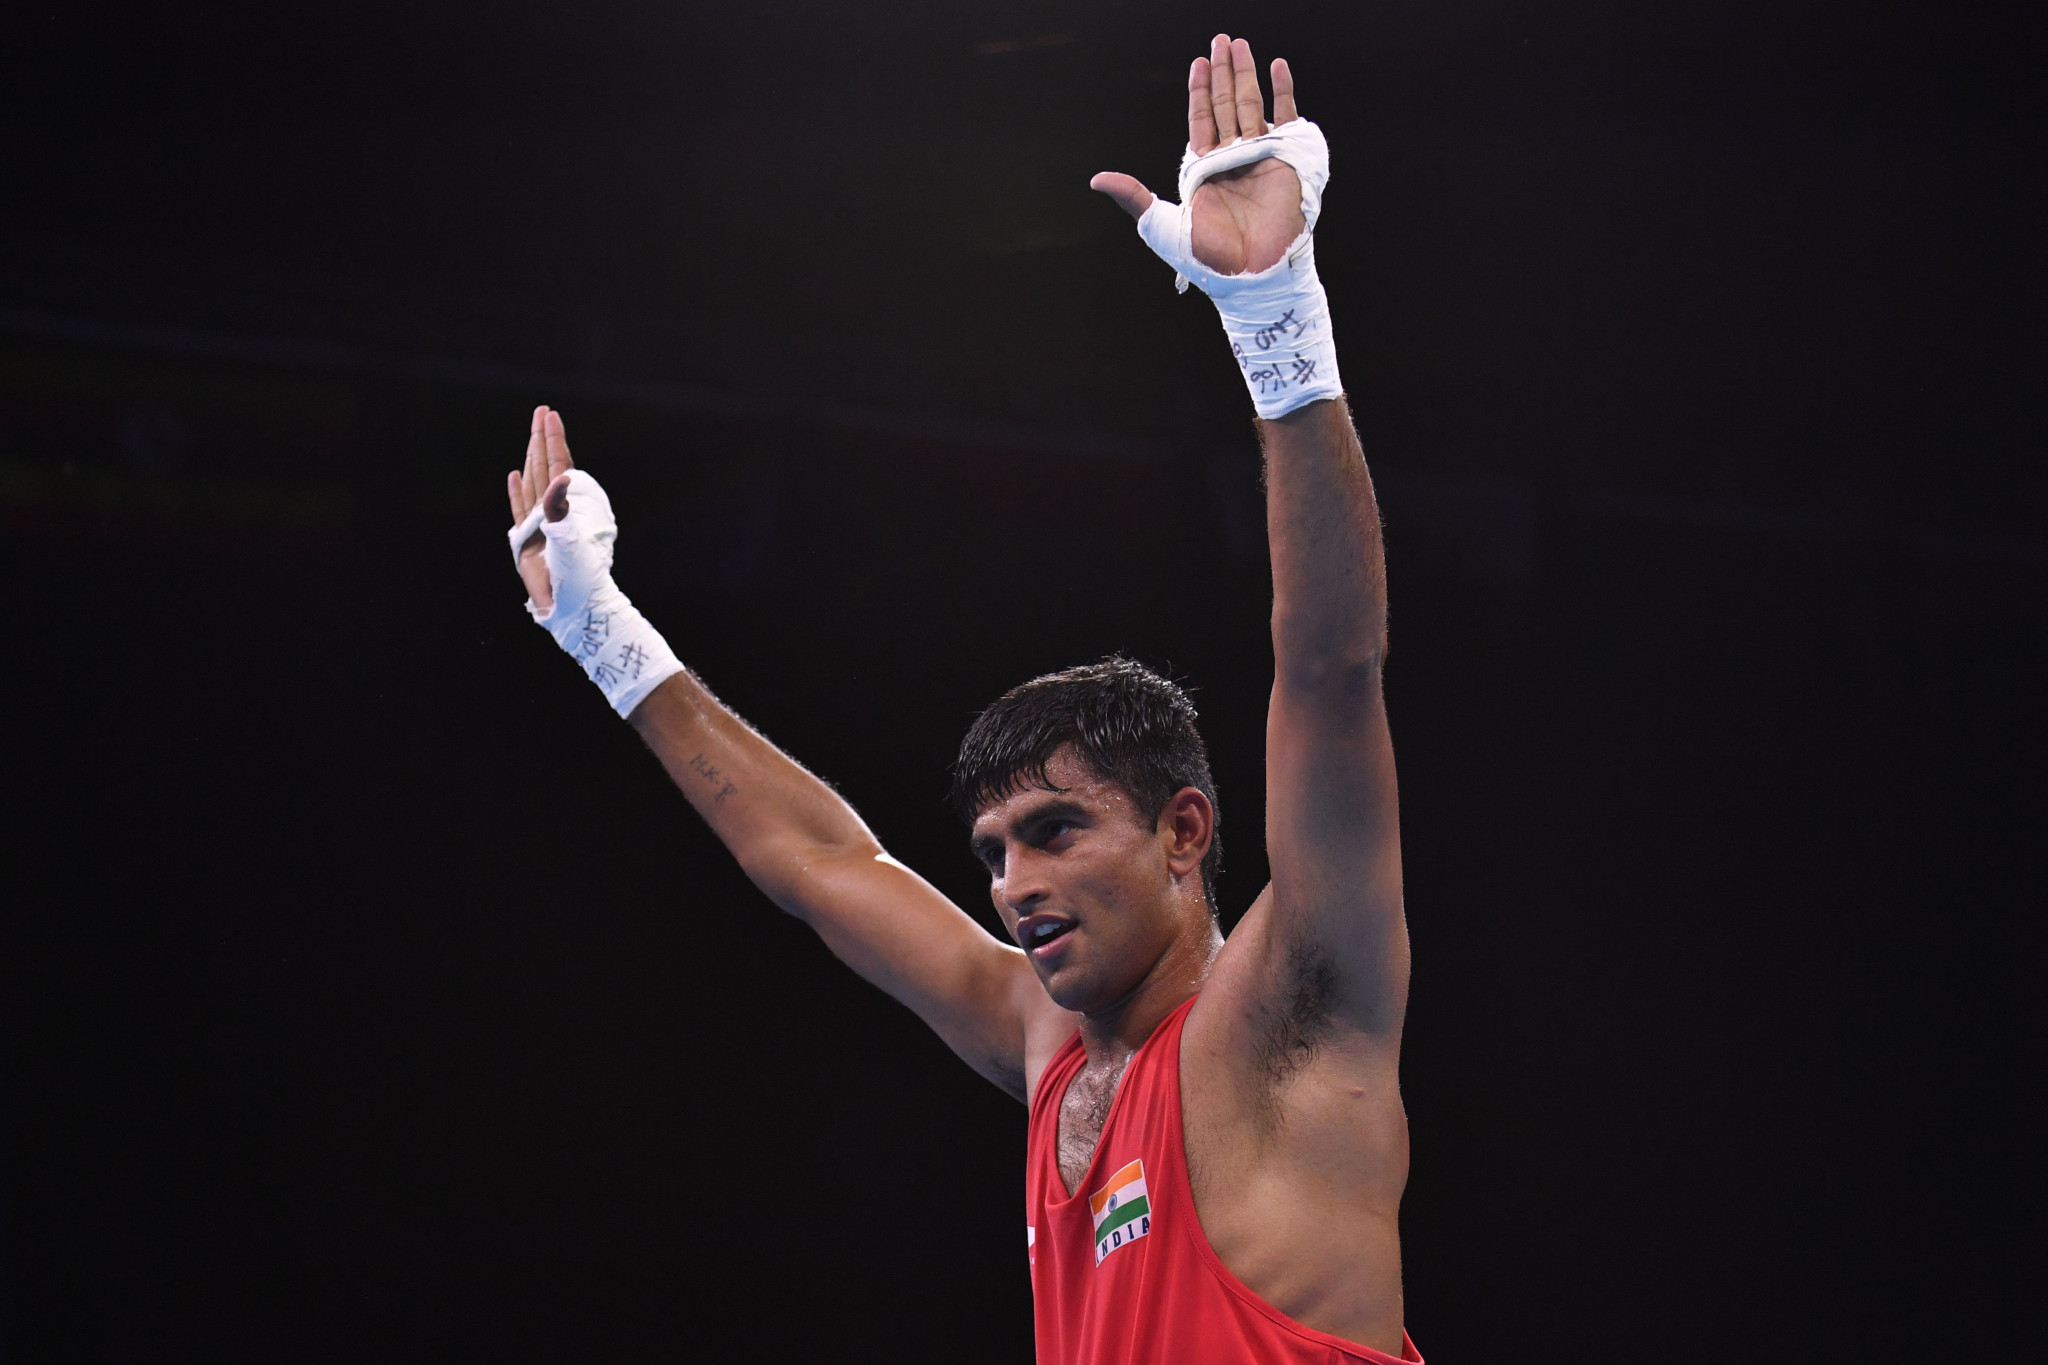 Boxing world bronze medallist Kaushik aiming for gold at Tokyo 2020